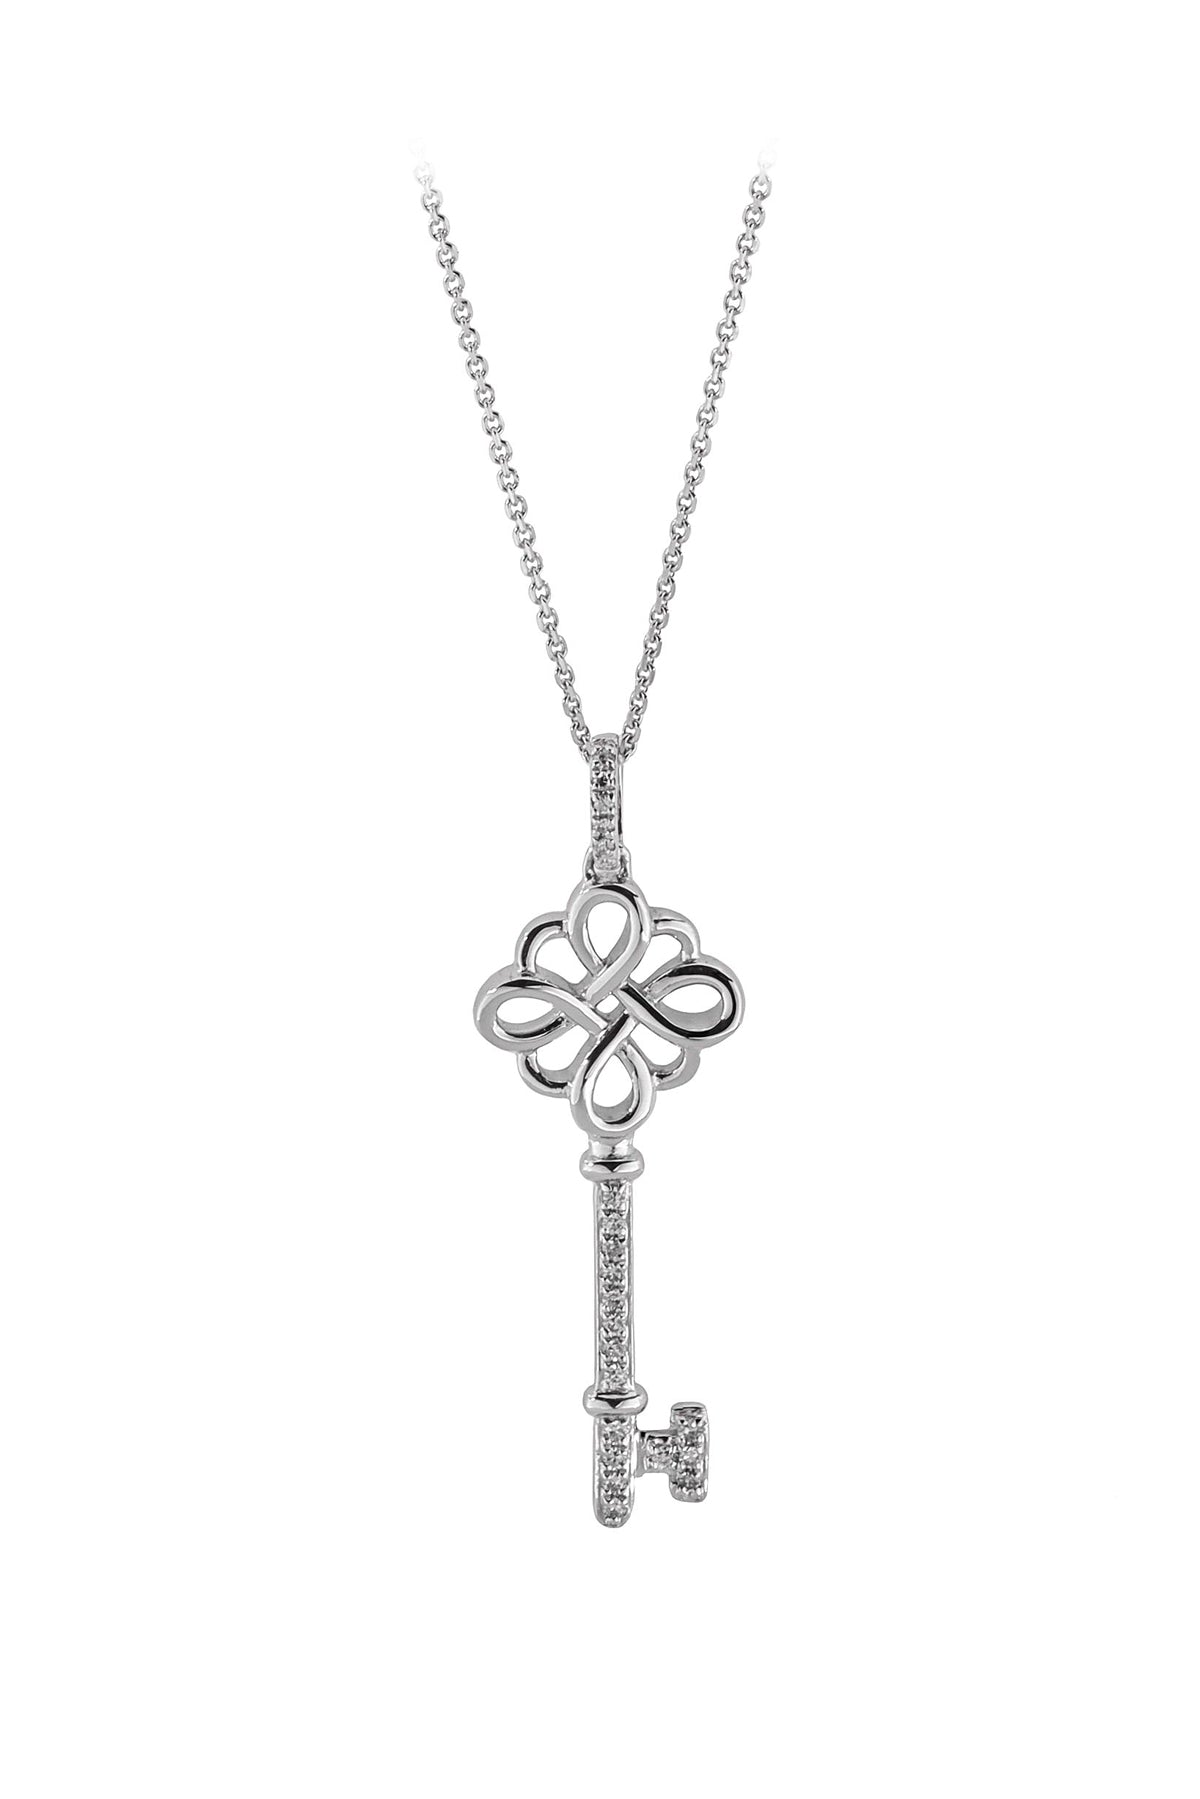 9 Carat Gold Diamond Key Pendant available at LeGassick Diamonds and Jewellery Gold Coast, Australia.